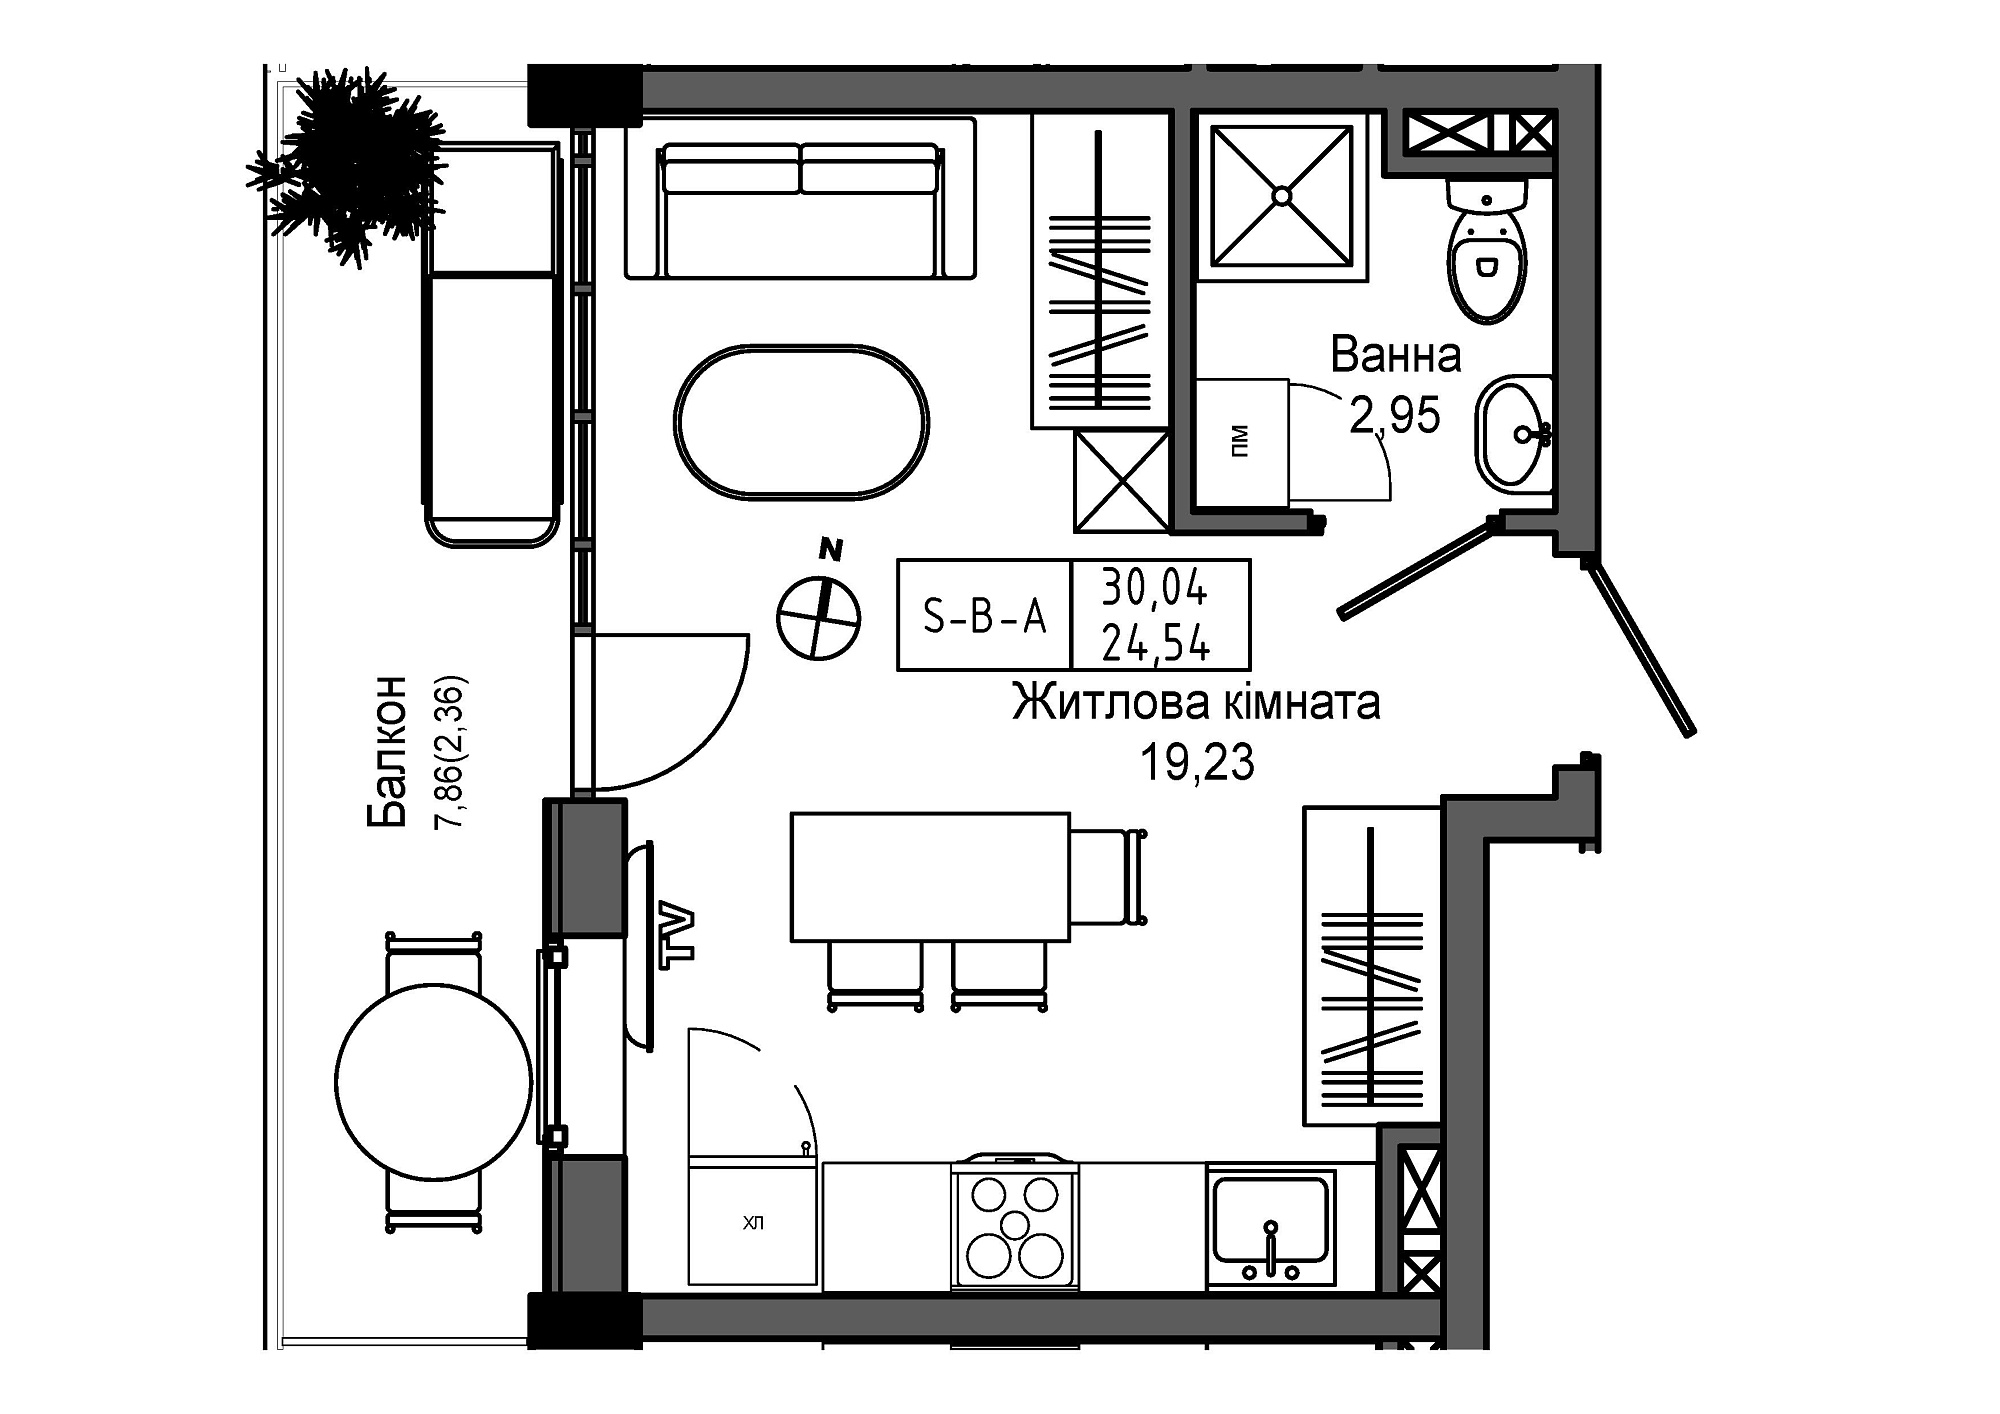 Планування Smart-квартира площею 24.54м2, UM-006-05/0009.